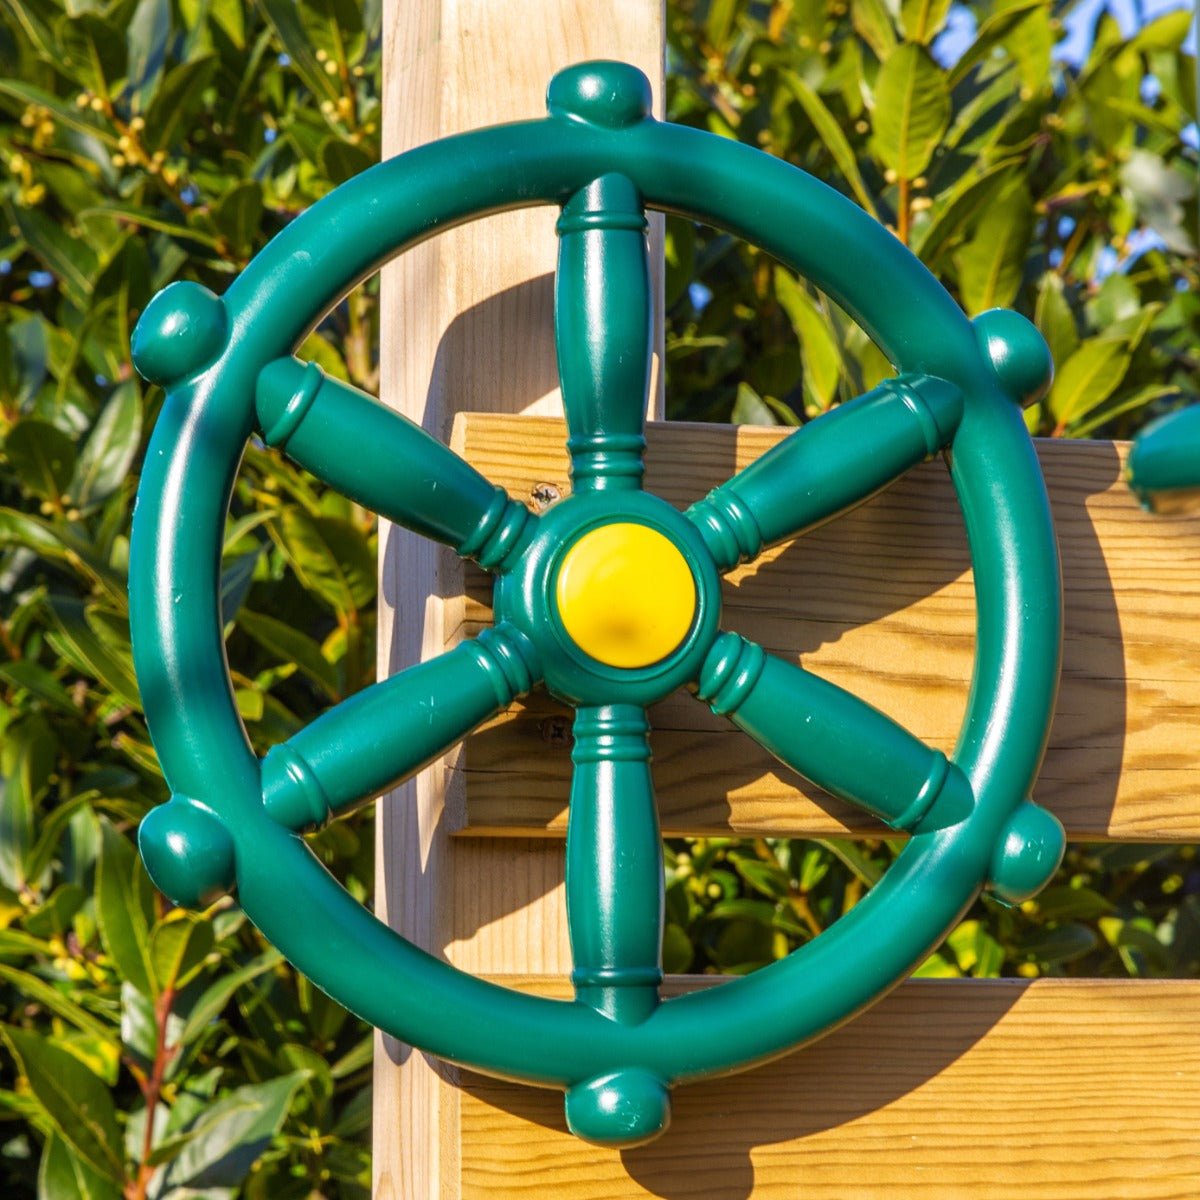 Rebo Garden Climbing Frame Accessory Plastic Play Ships Steering Wheel - Green